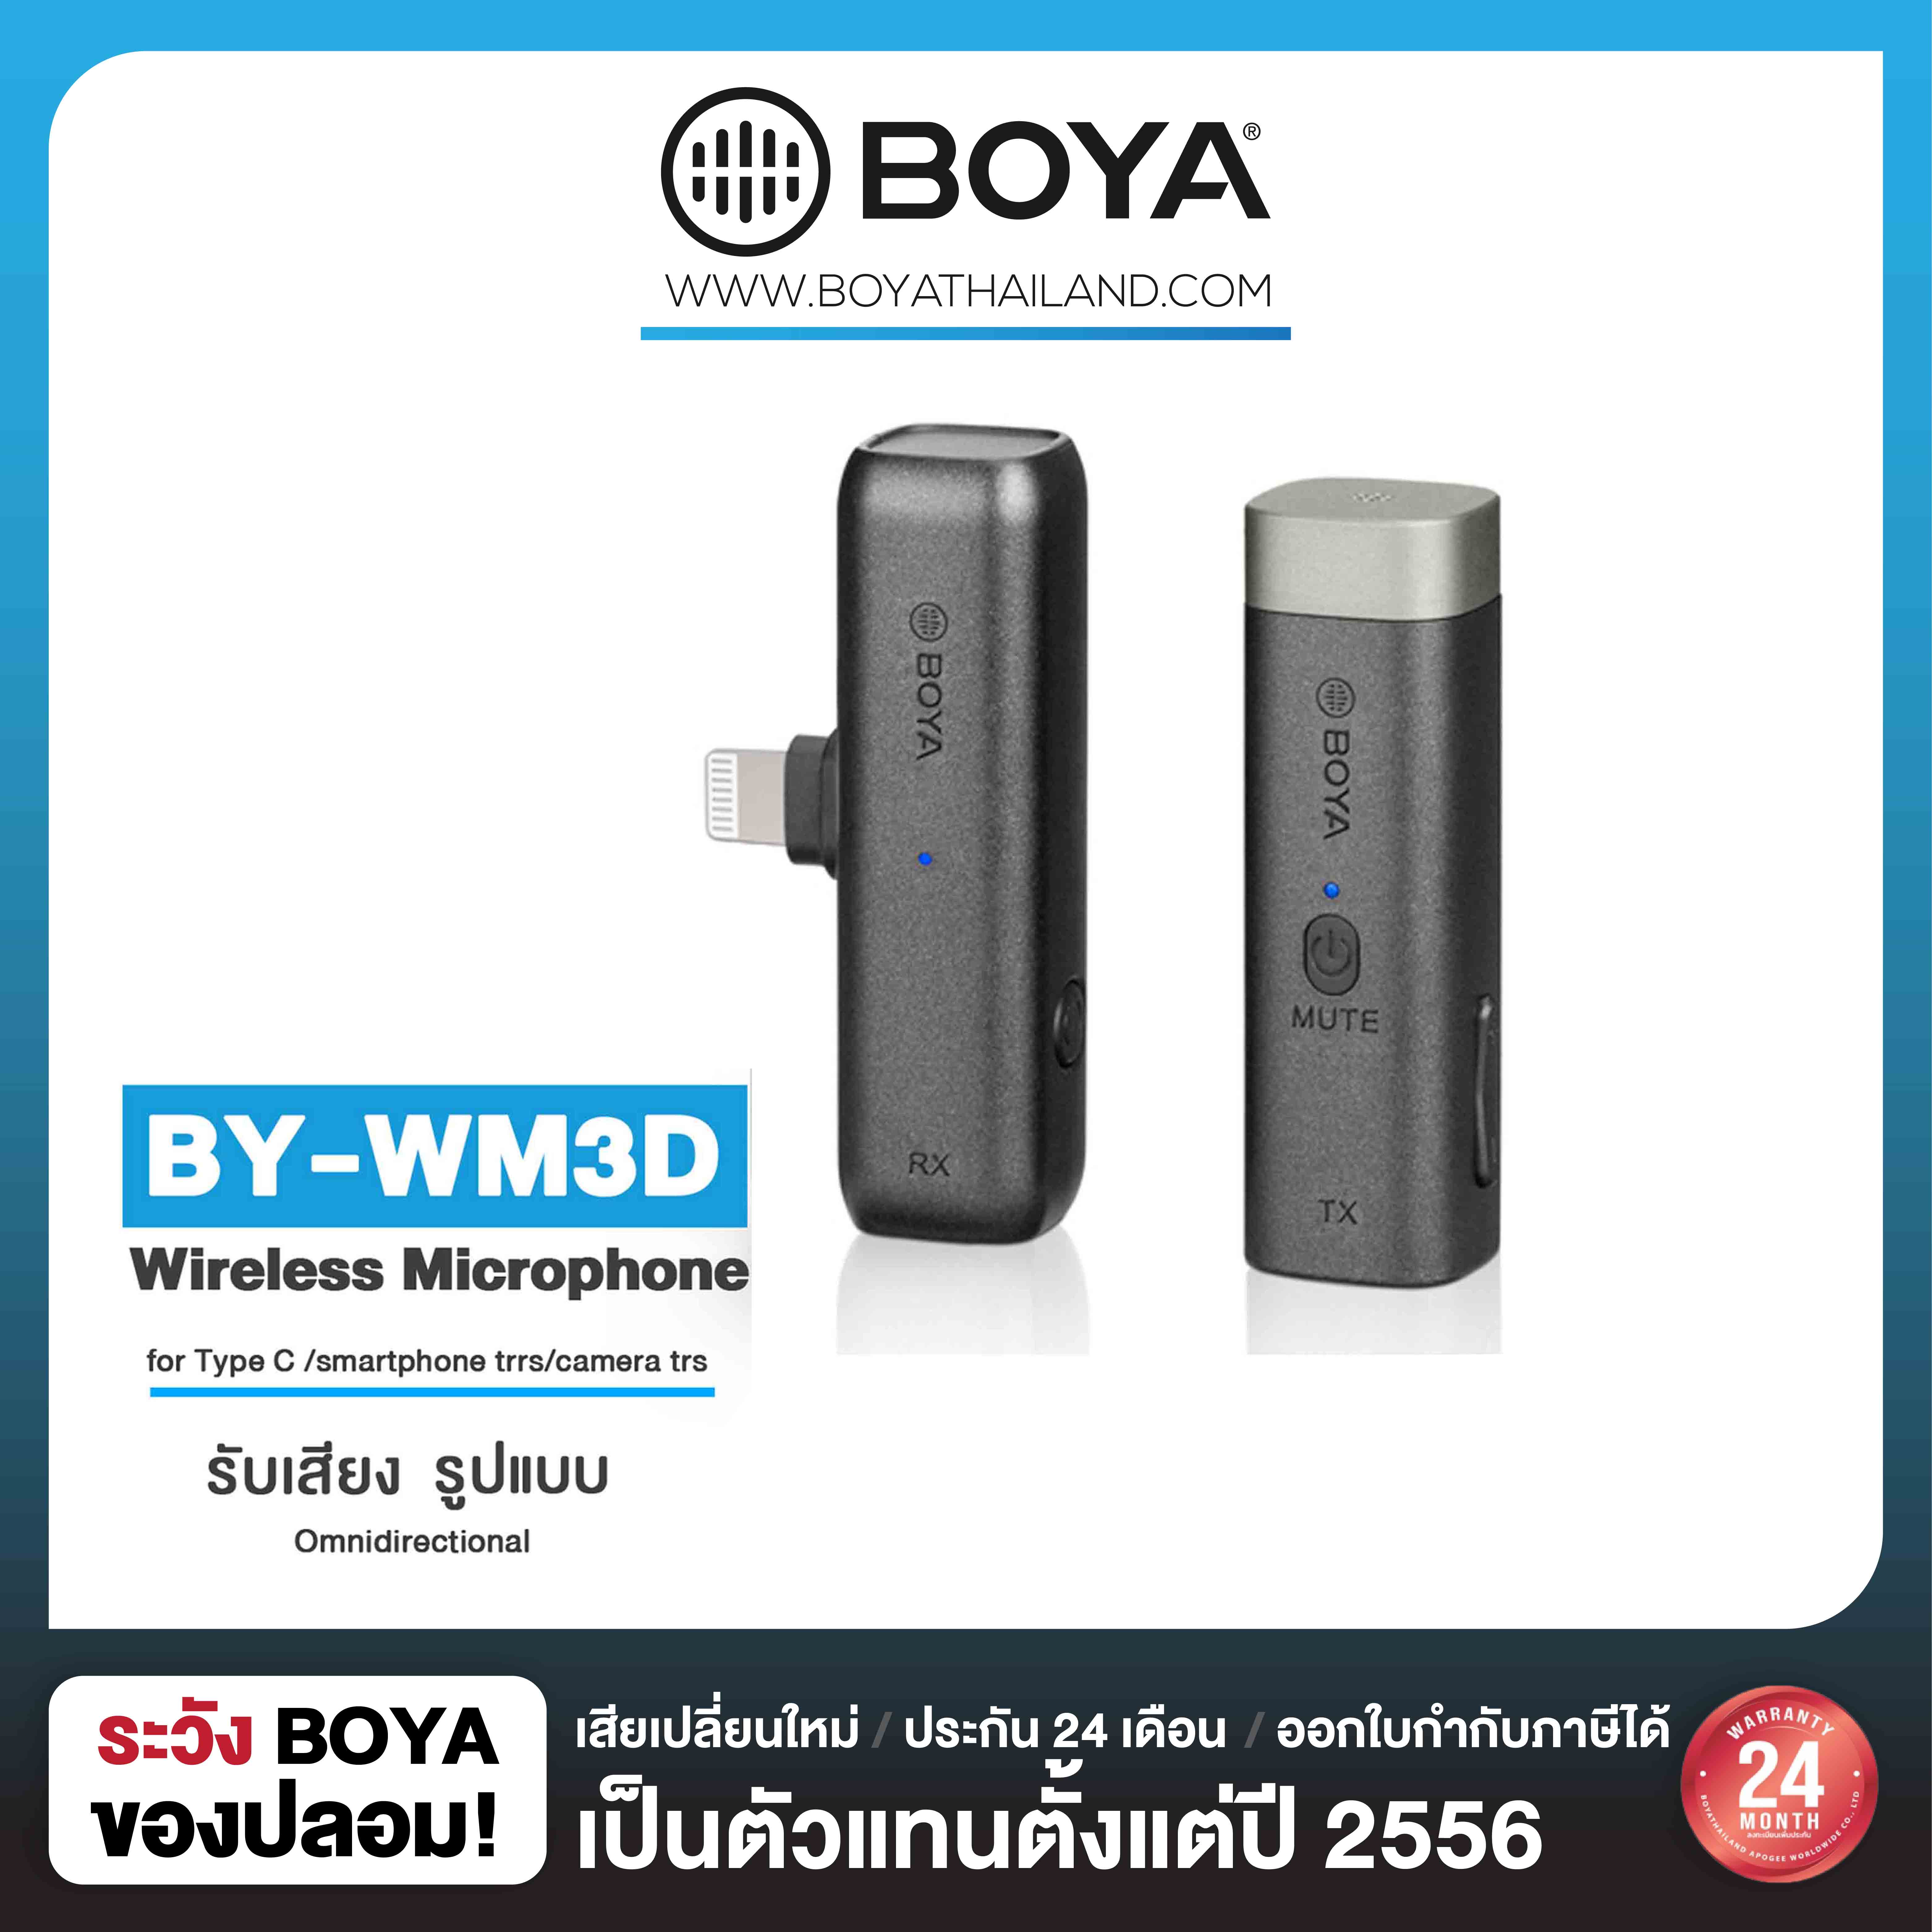 BOYA BY-WM3D 2.4GHz Wireless Microphone